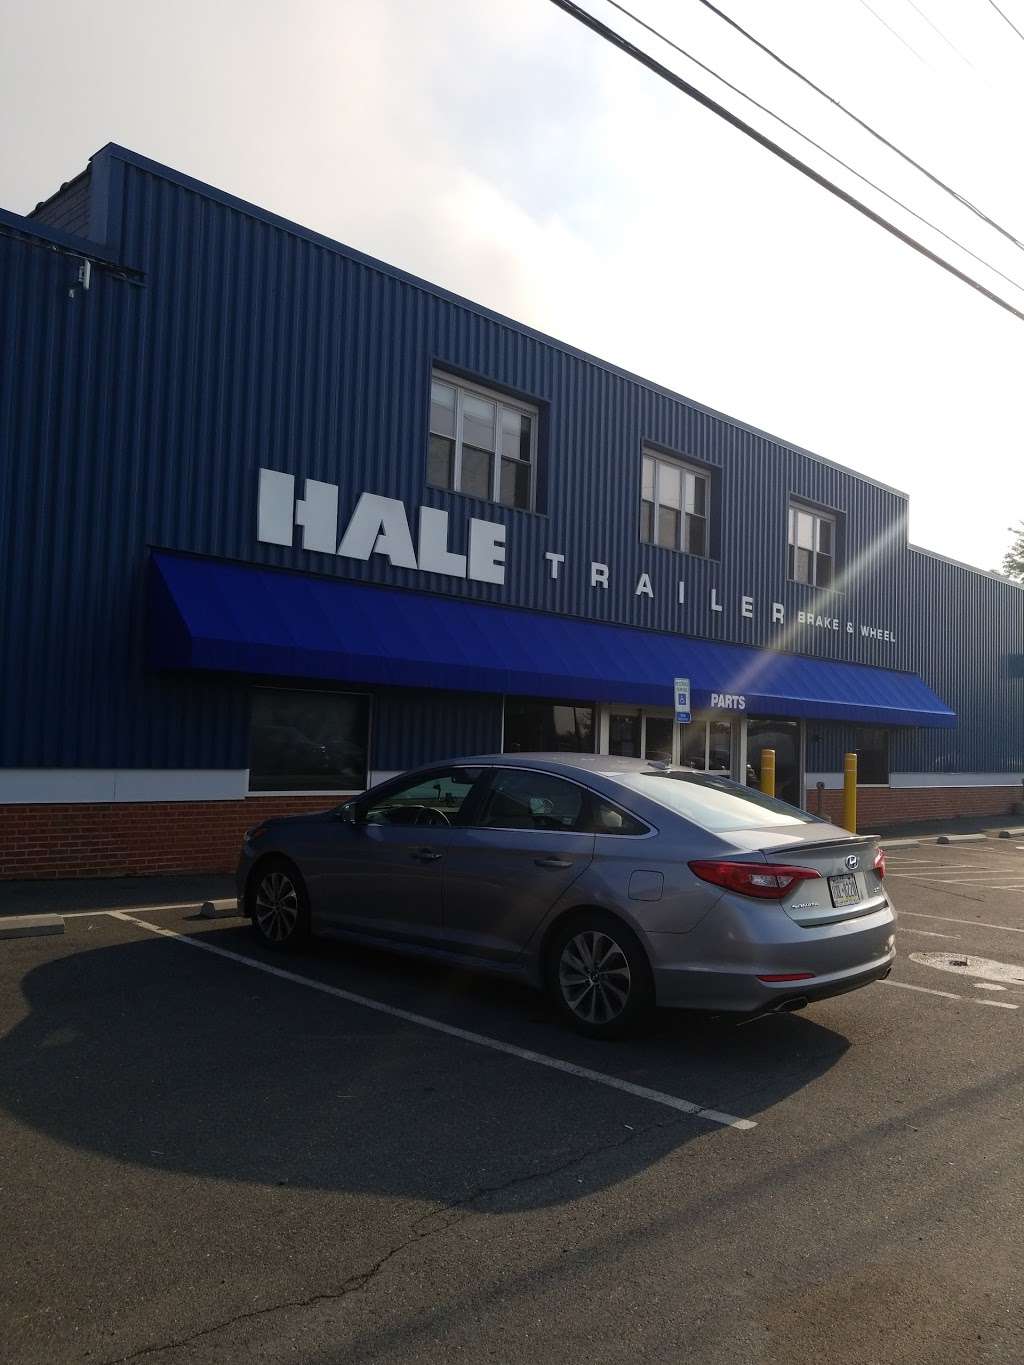 Hale Trailer Brake & Wheel, Inc. - car repair  | Photo 6 of 10 | Address: 5361 Oakview Dr, Allentown, PA 18104, USA | Phone: (610) 395-0371